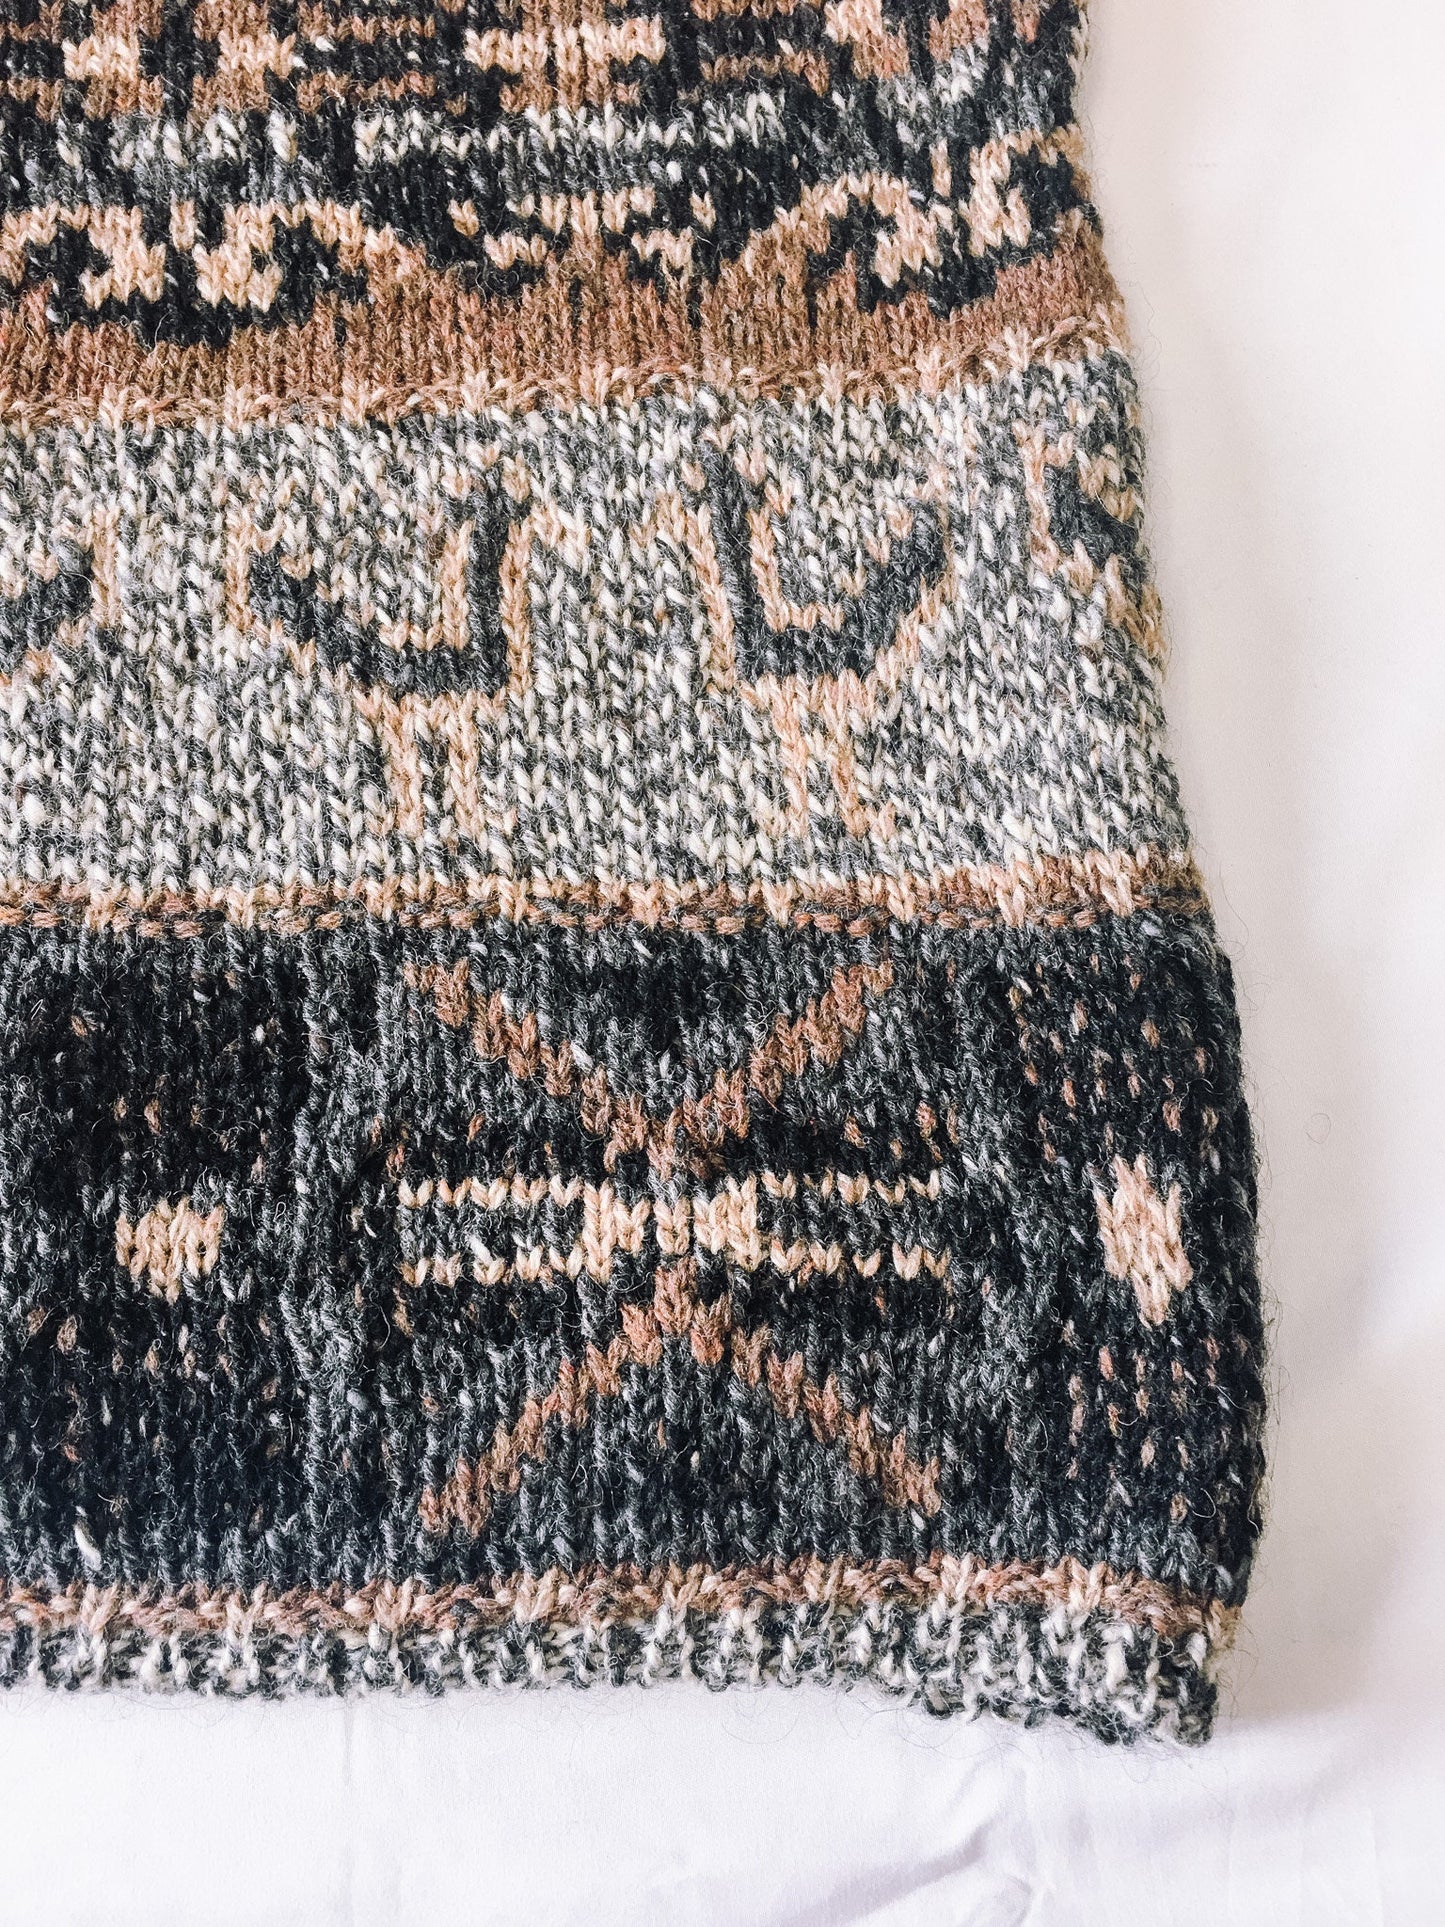 Vintage Gaeltarra Wool Brown and Black Mock Neck Wool Sweater, Made in Ireland, Men's Sz. M